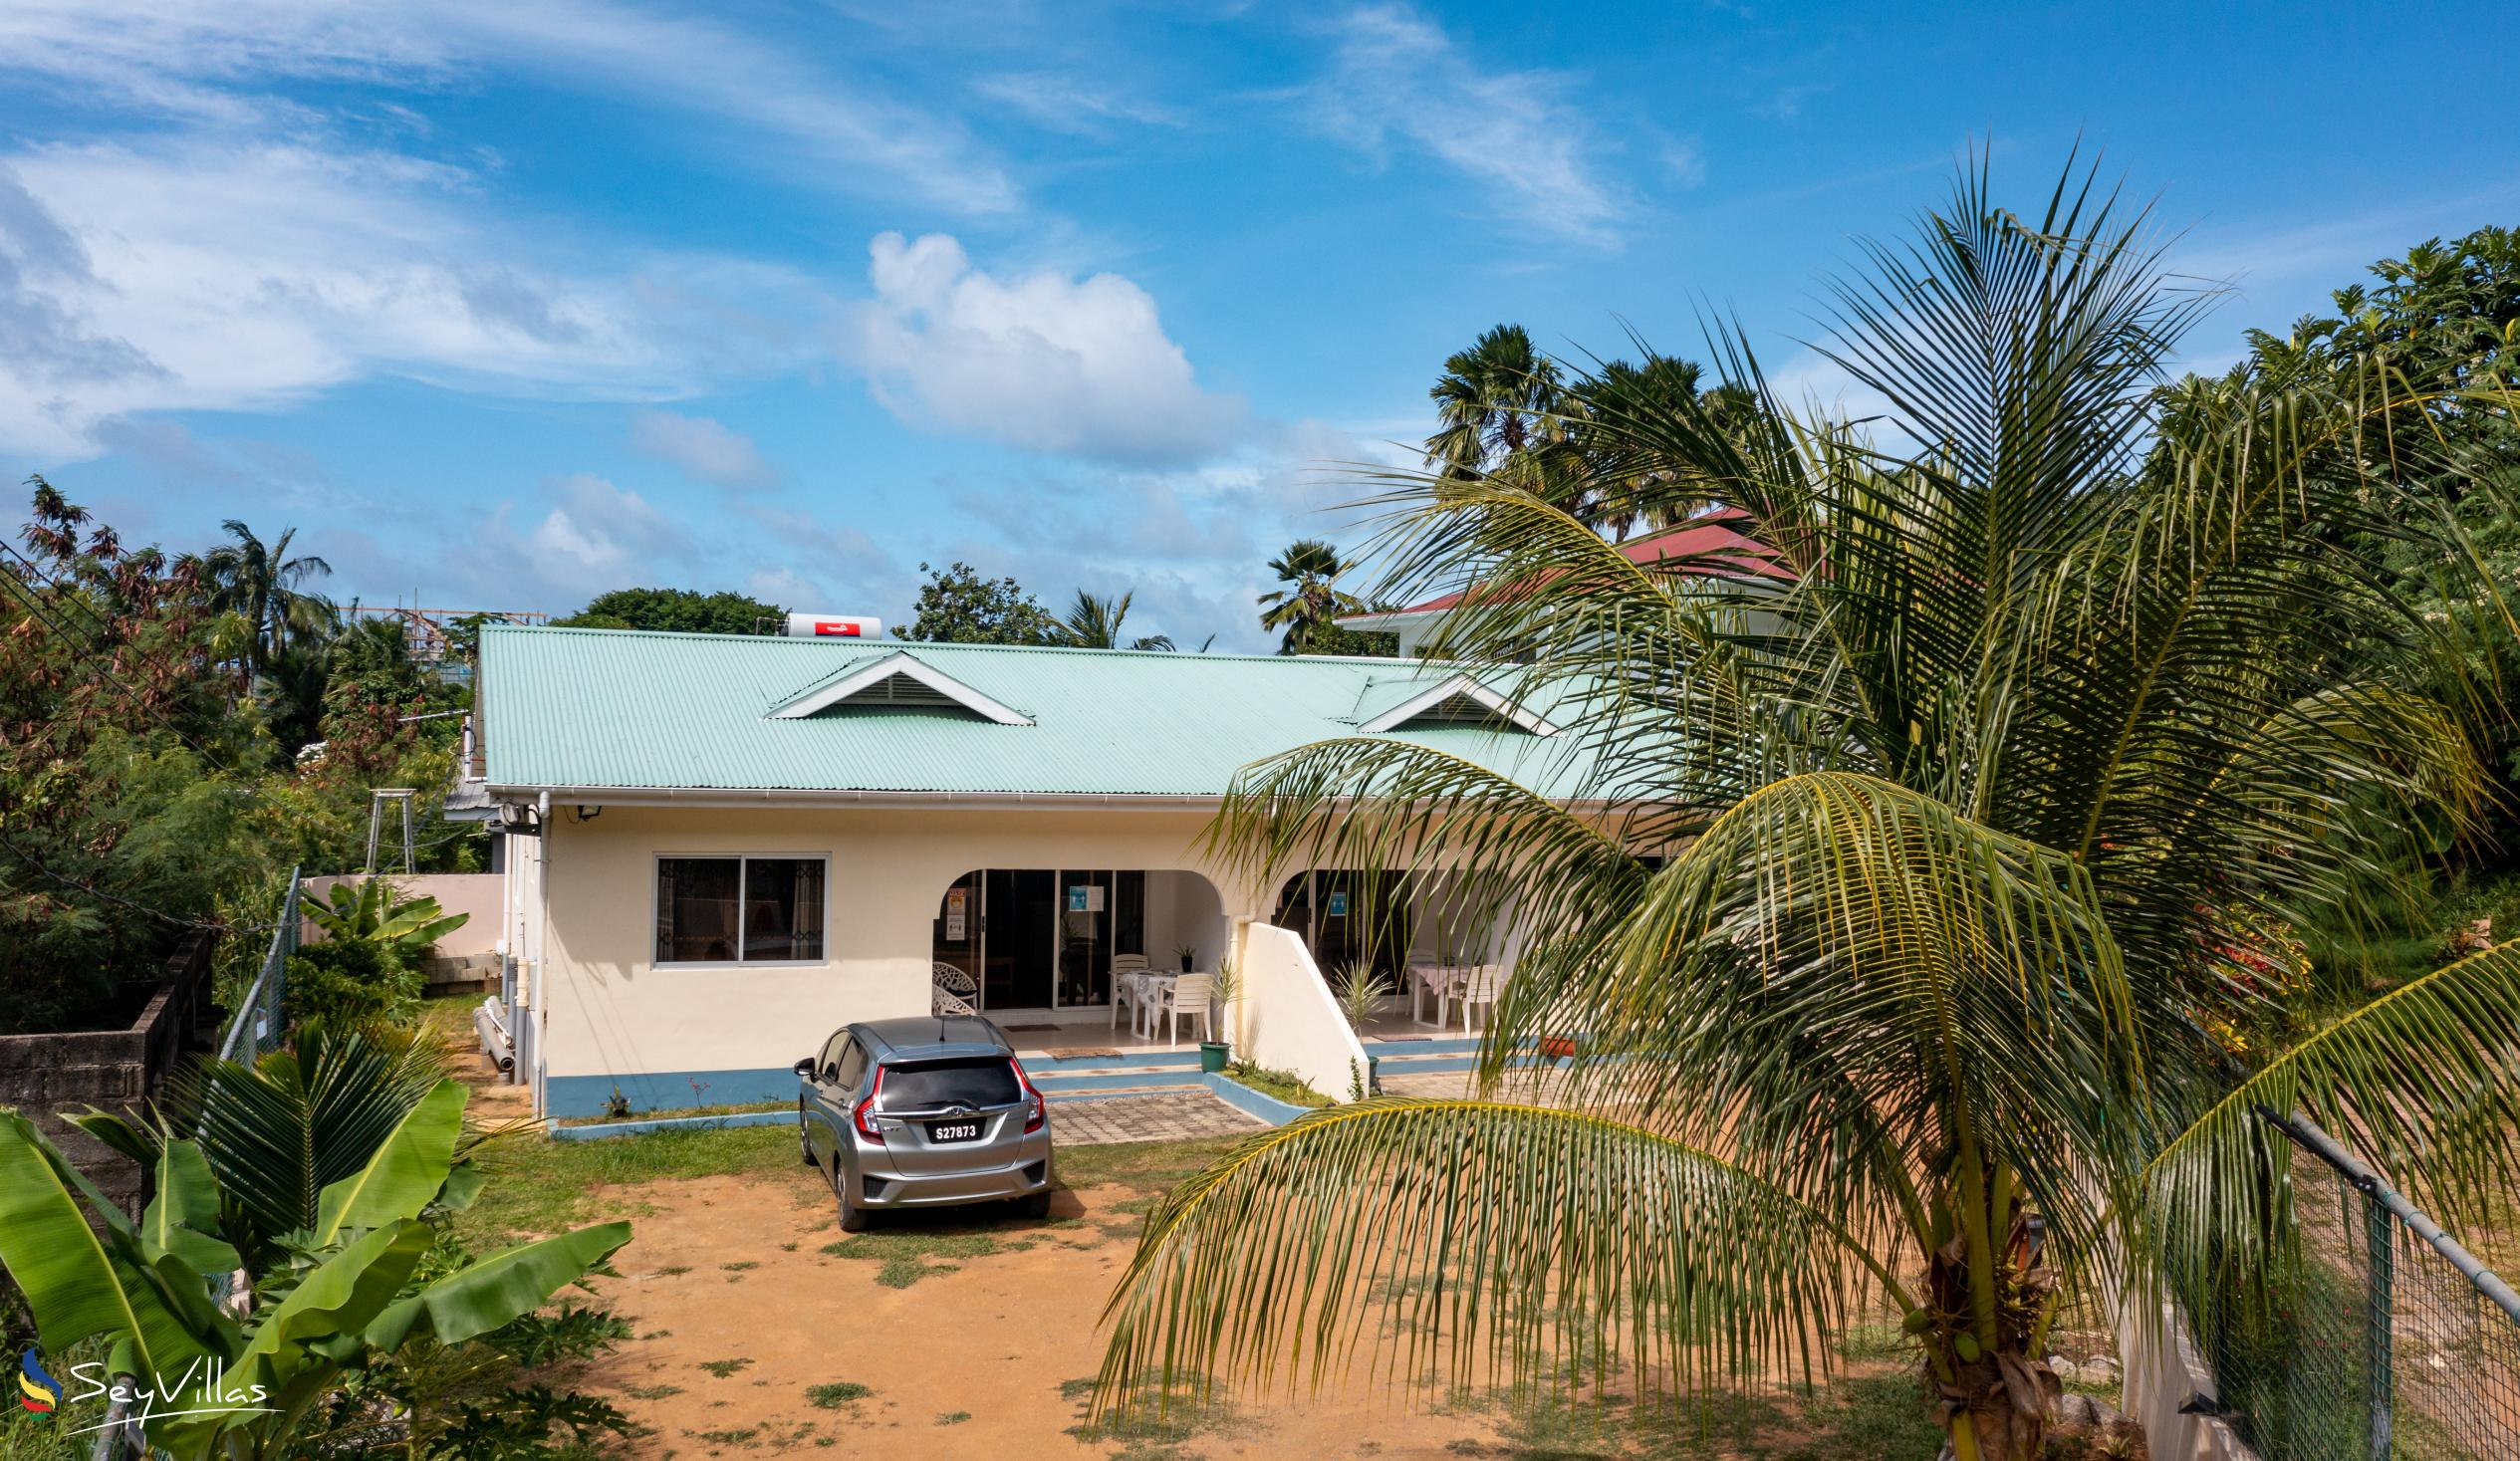 Foto 5: Farida Apartments - Aussenbereich - Mahé (Seychellen)